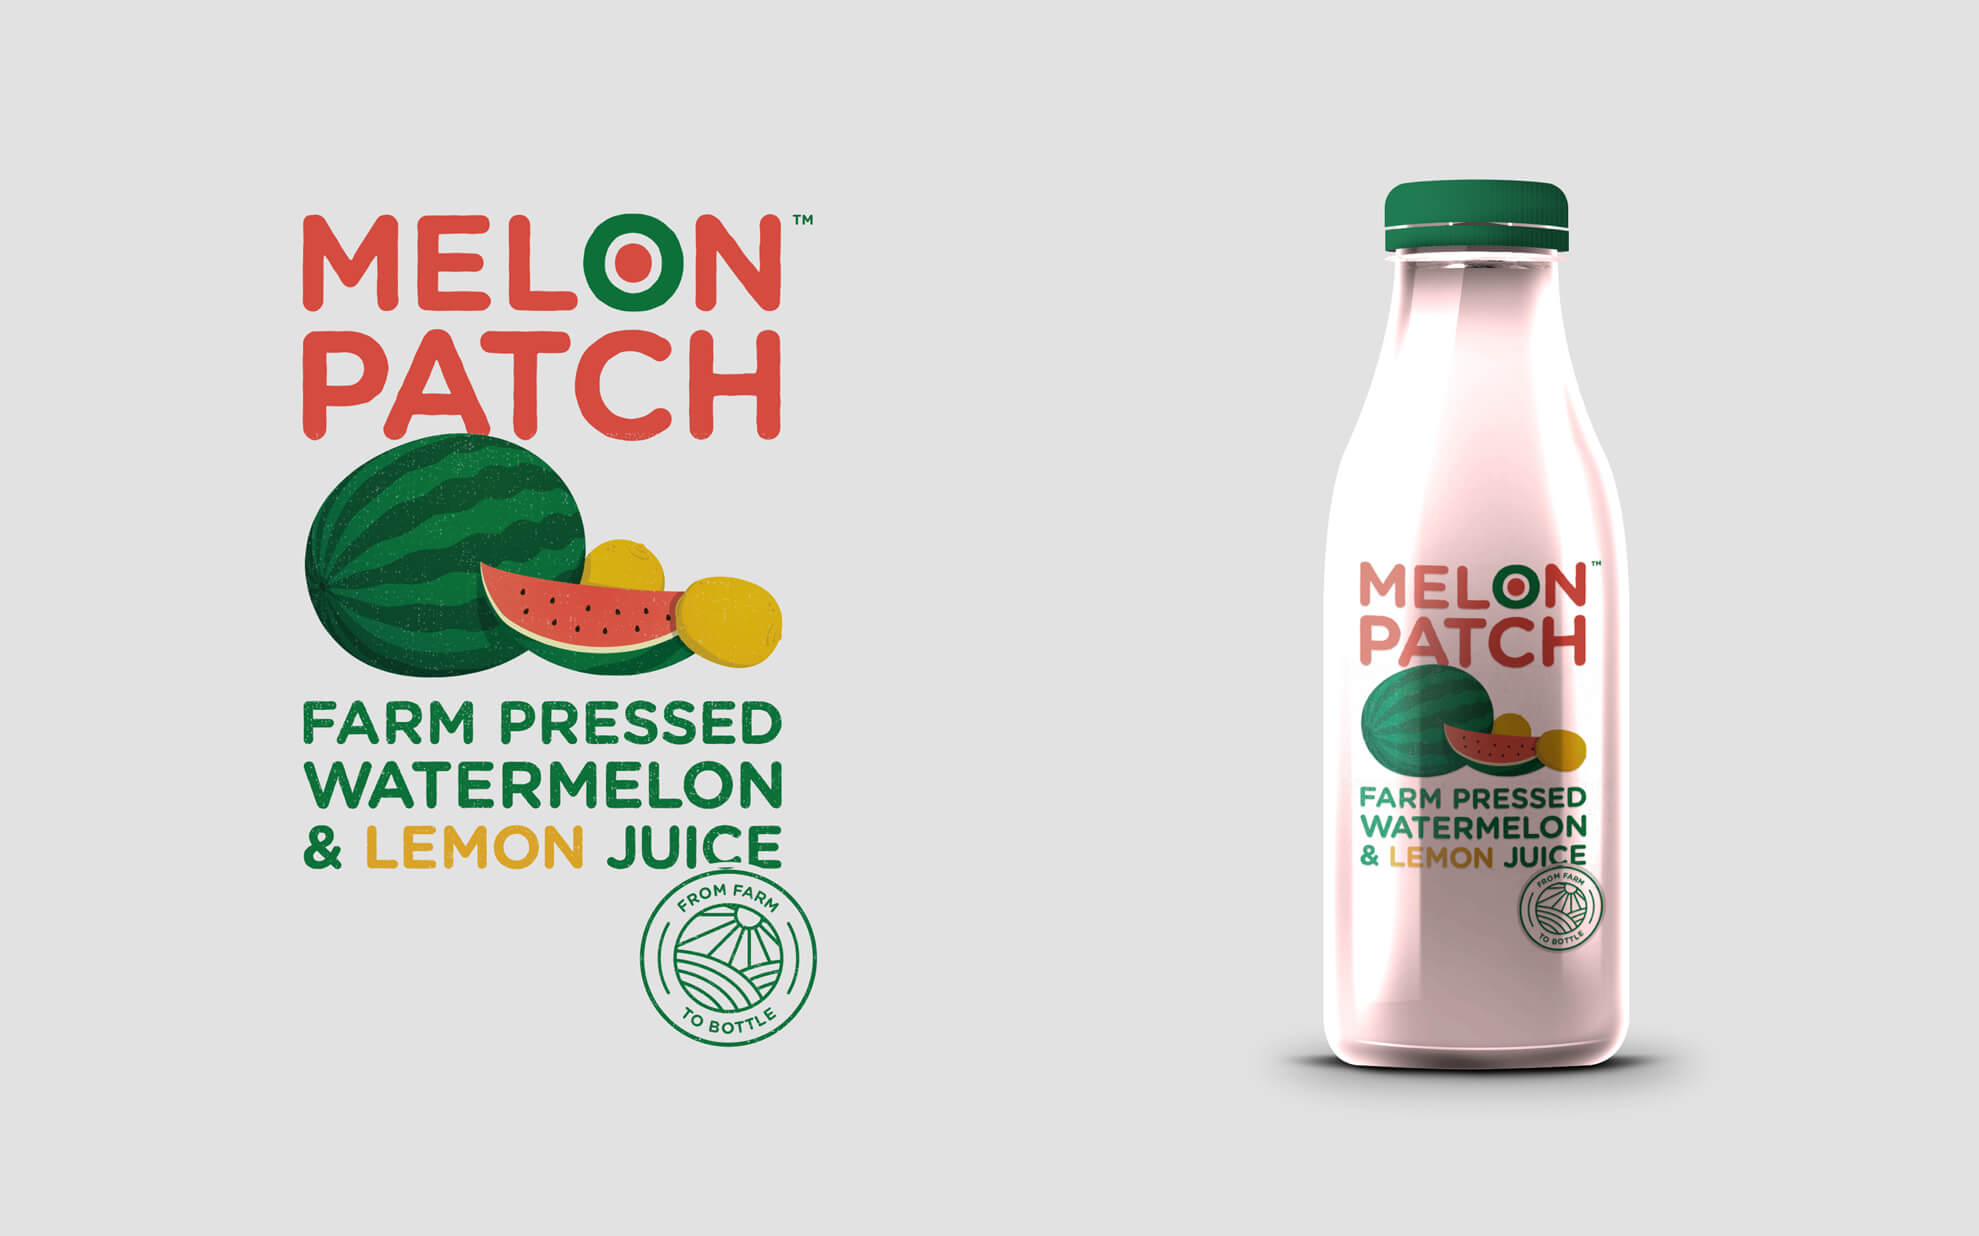 Melon Patch logo and bottle